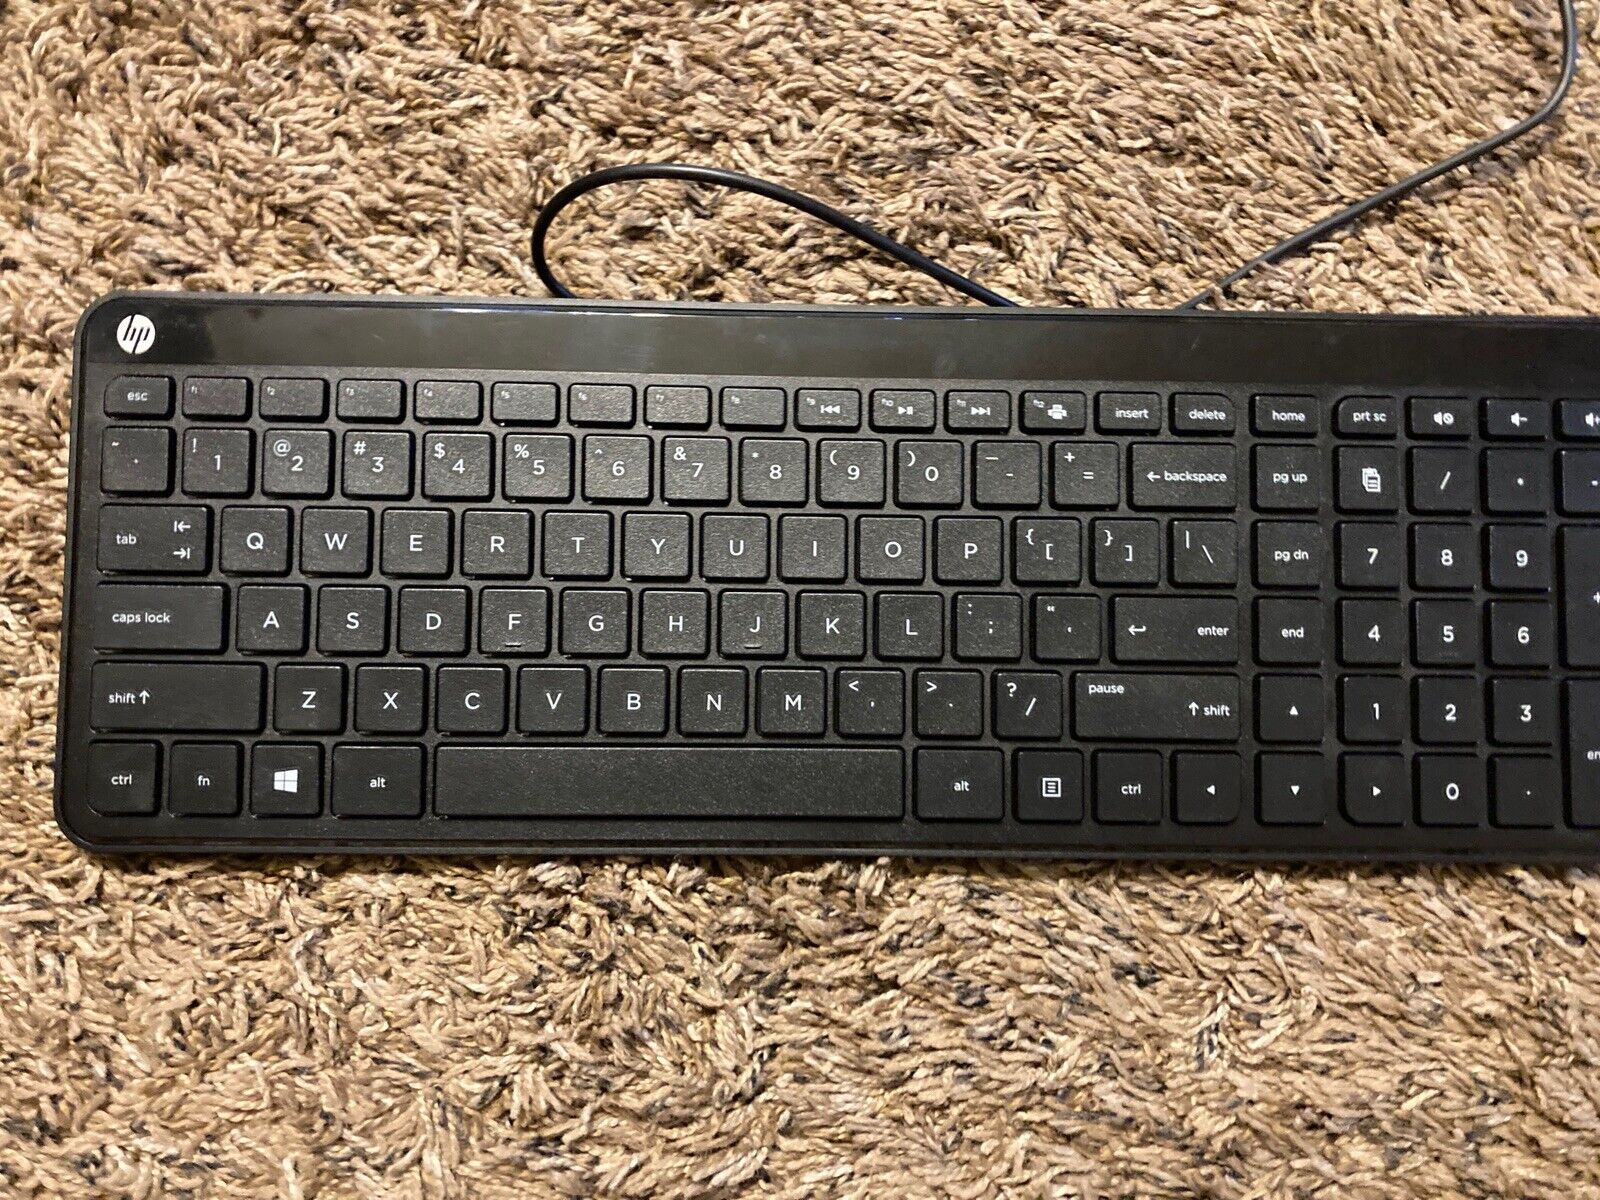 HP Keyboard SK-2028 US Keys Black Slim Wired PC USB Works Great